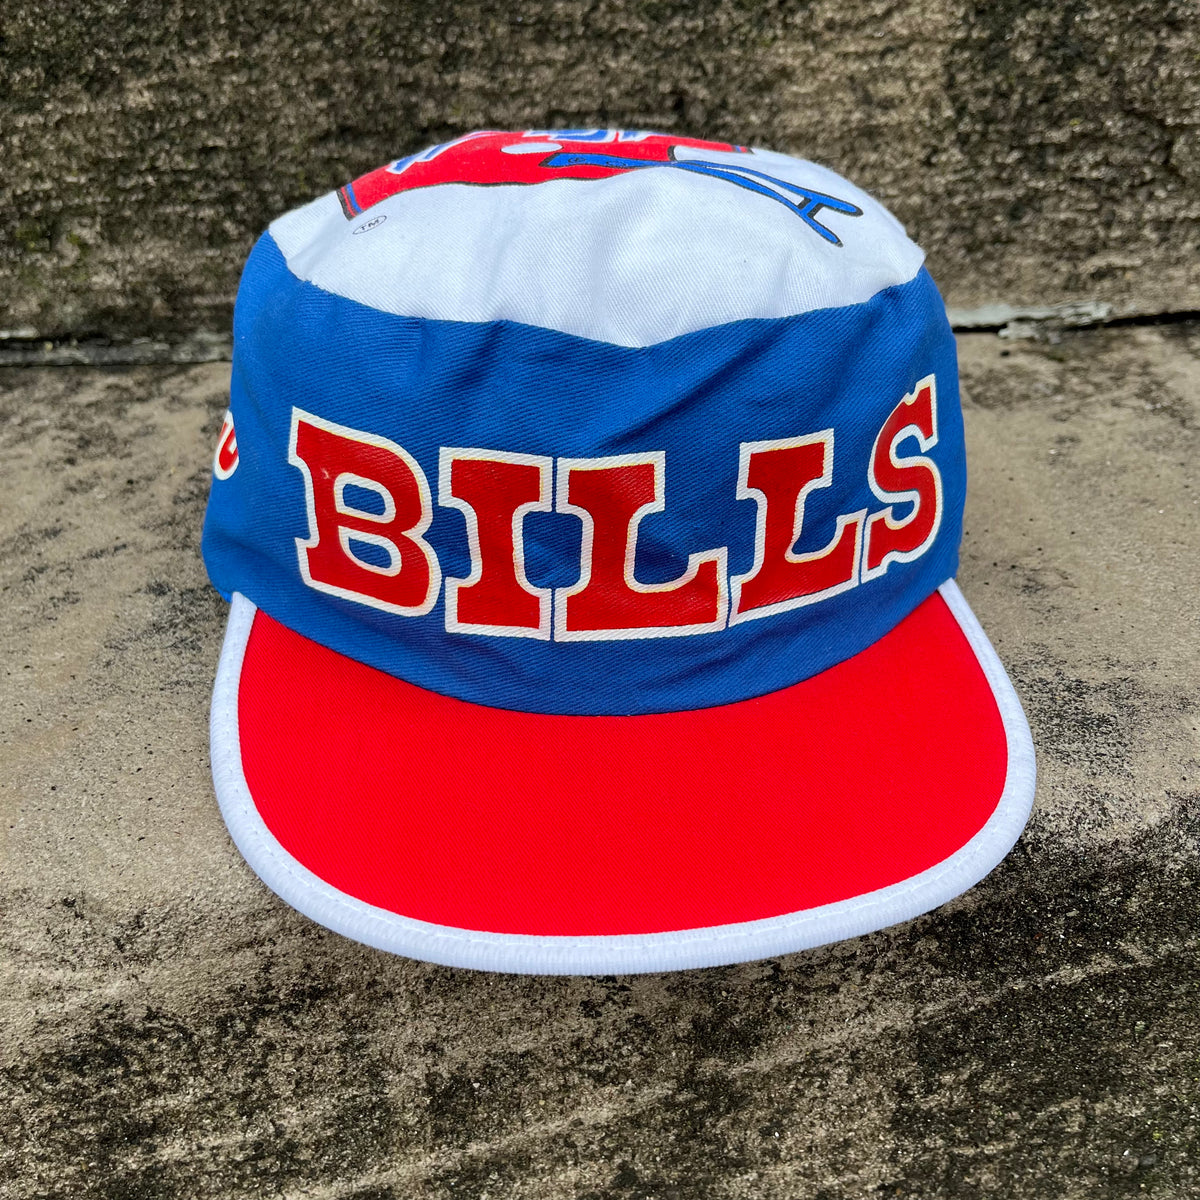 Vintage Chicago Bulls Champions Starter Hat – My Cuzin Vintage